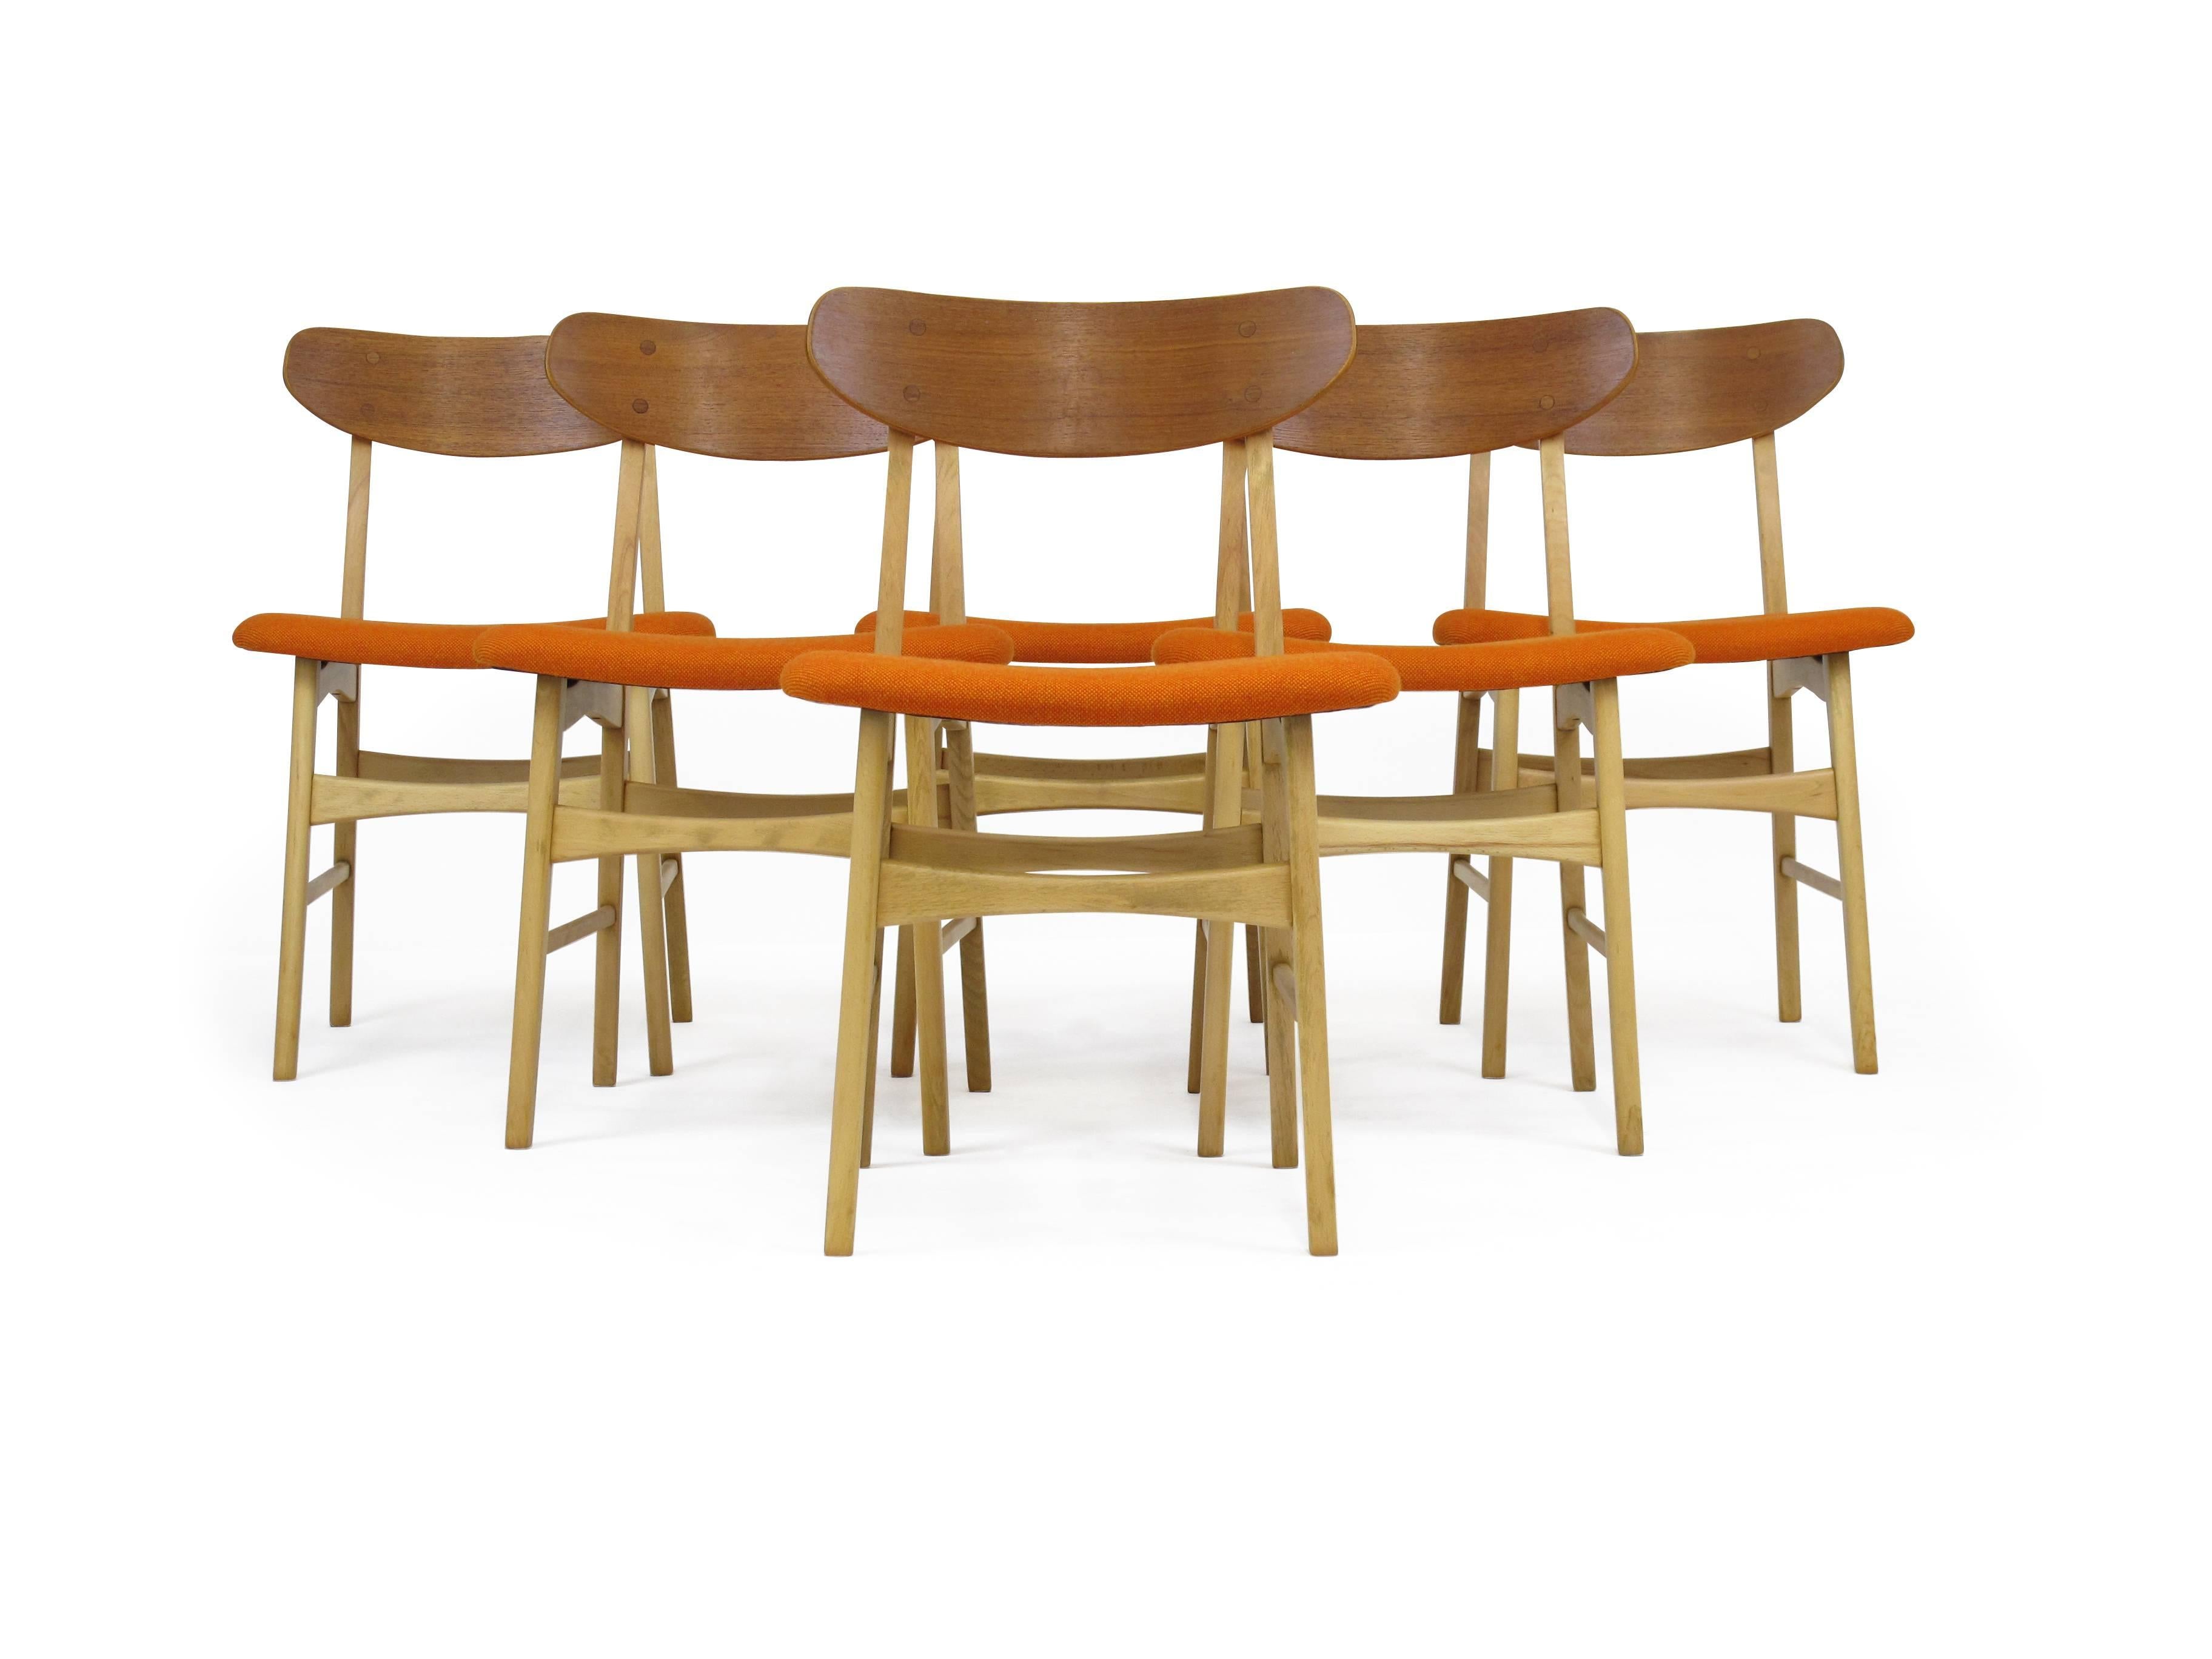 Scandinavian Modern Basic Danish Teak and Beech Dining Chairs with New Orange Seats